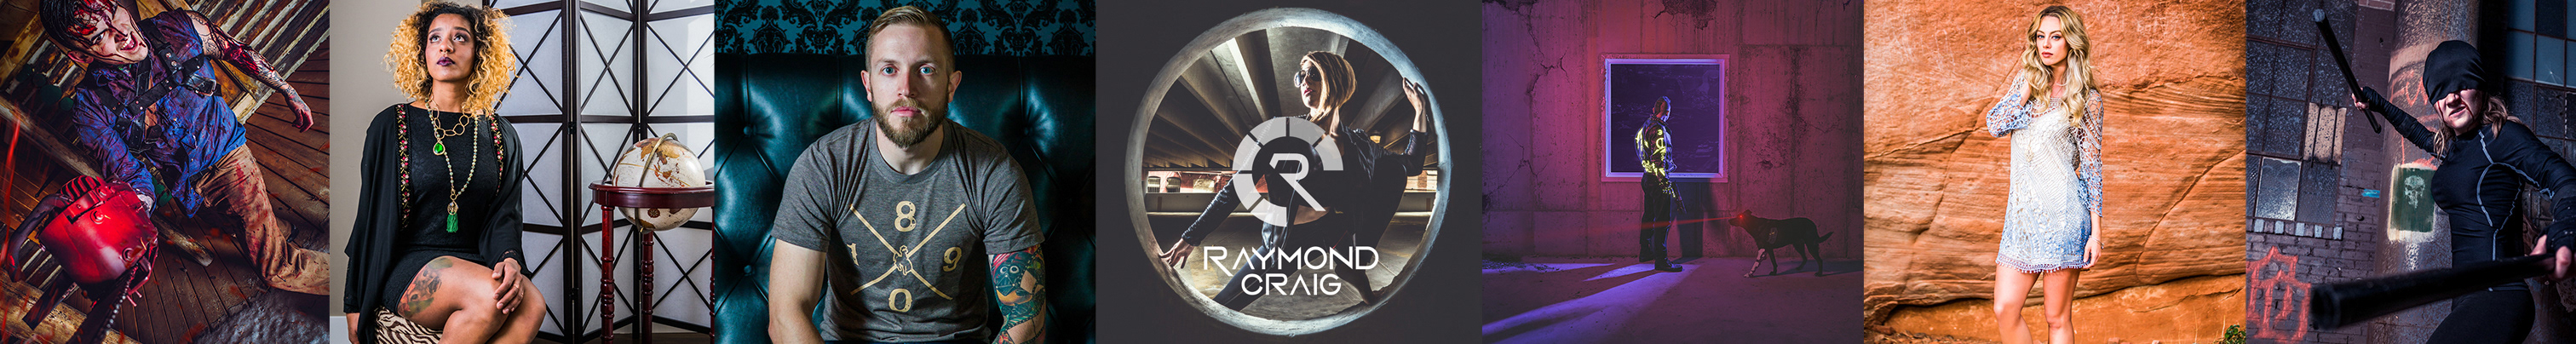 Raymond Craig's profile banner